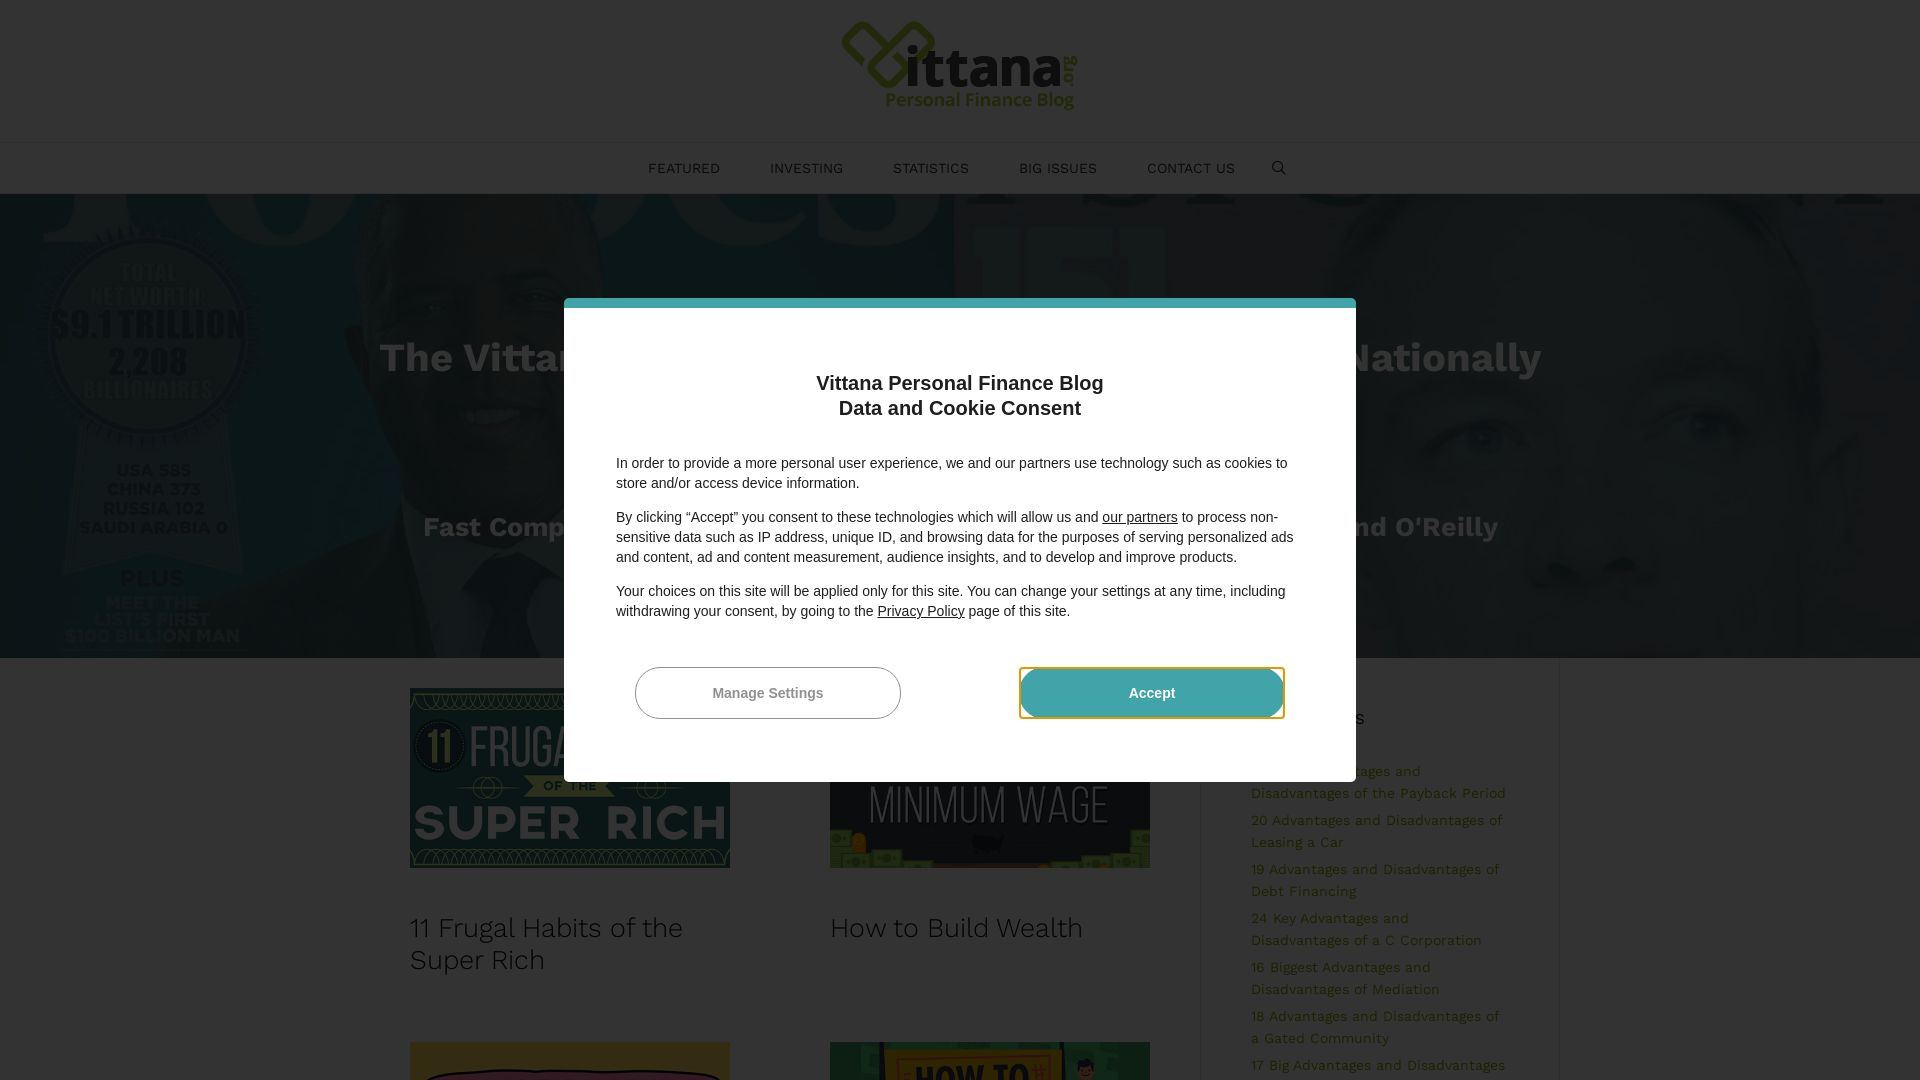 Website status vittana.org is   ONLINE